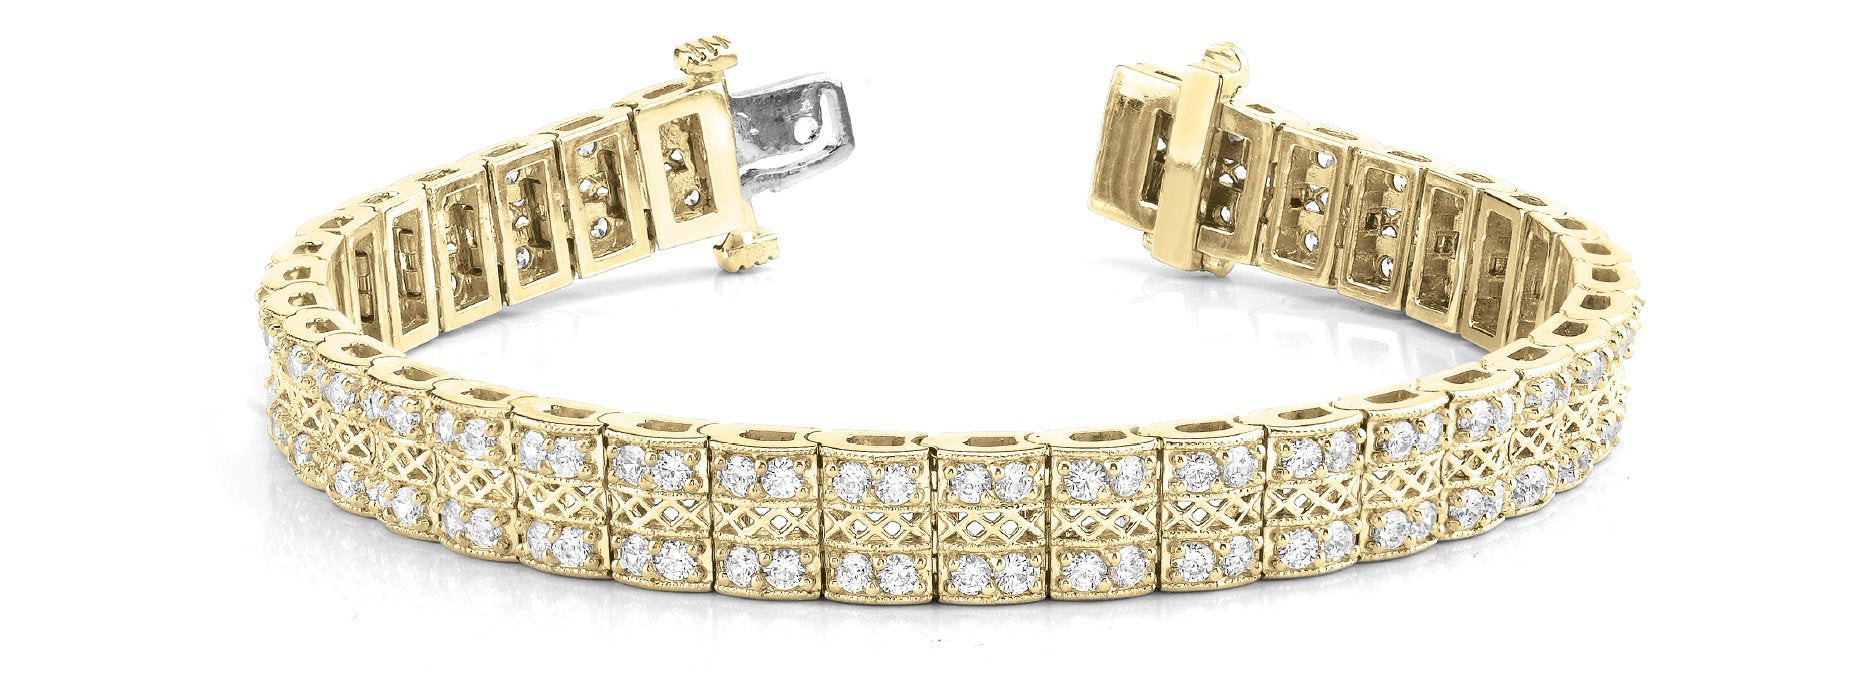 Fancy Diamond Bracelet Ladies 3.61ct tw - 14kt Yellow Gold